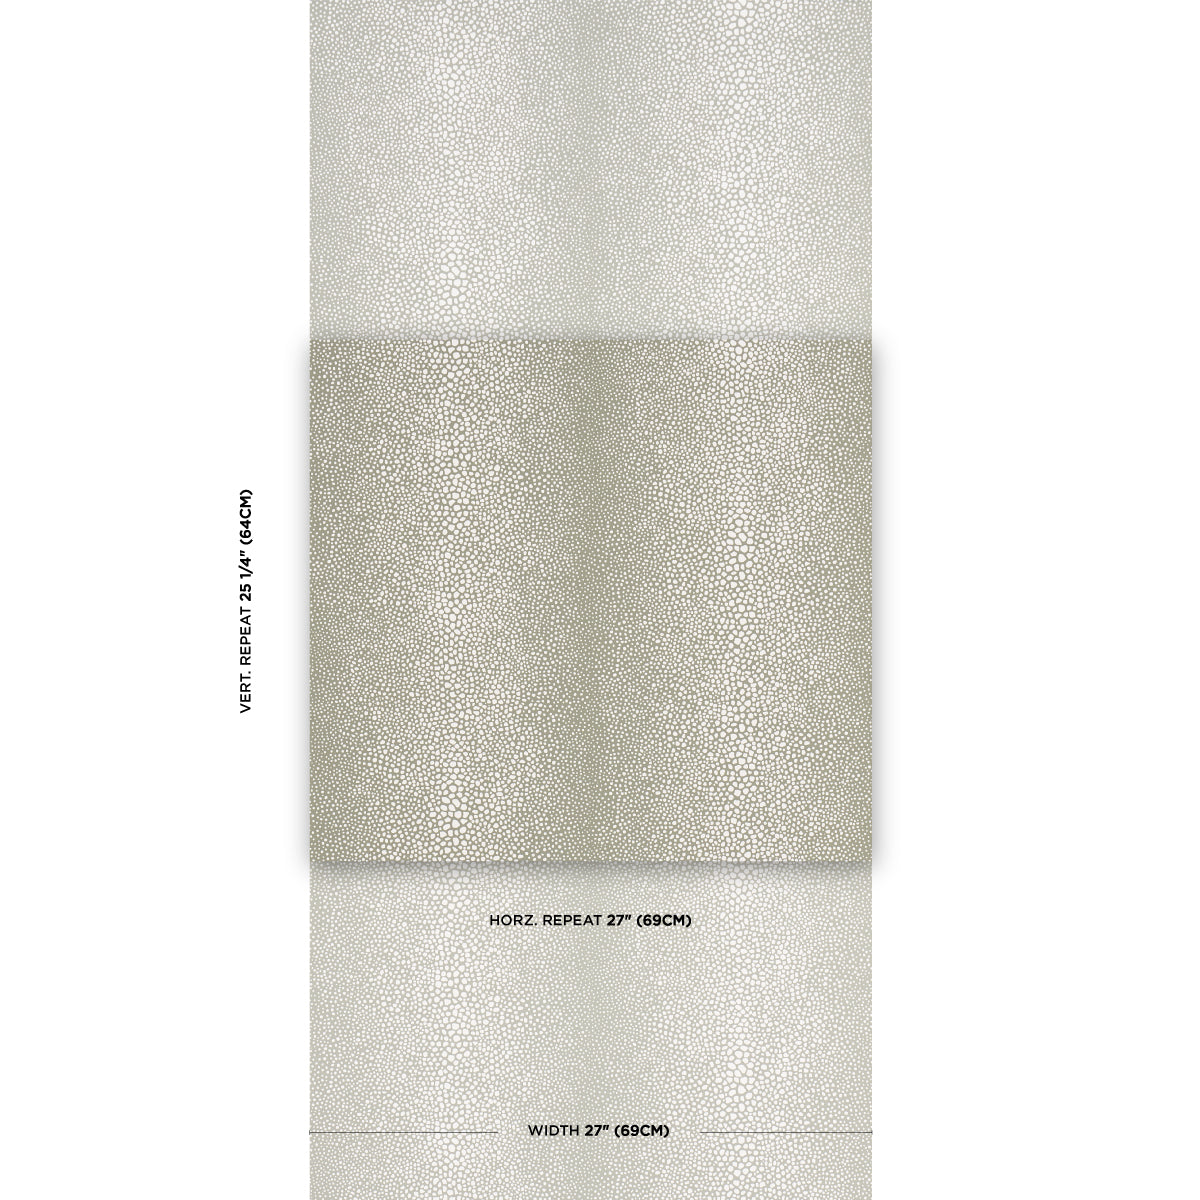 Purchase 5015310 | Fickle Texture, Kelp - Schumacher Wallpaper